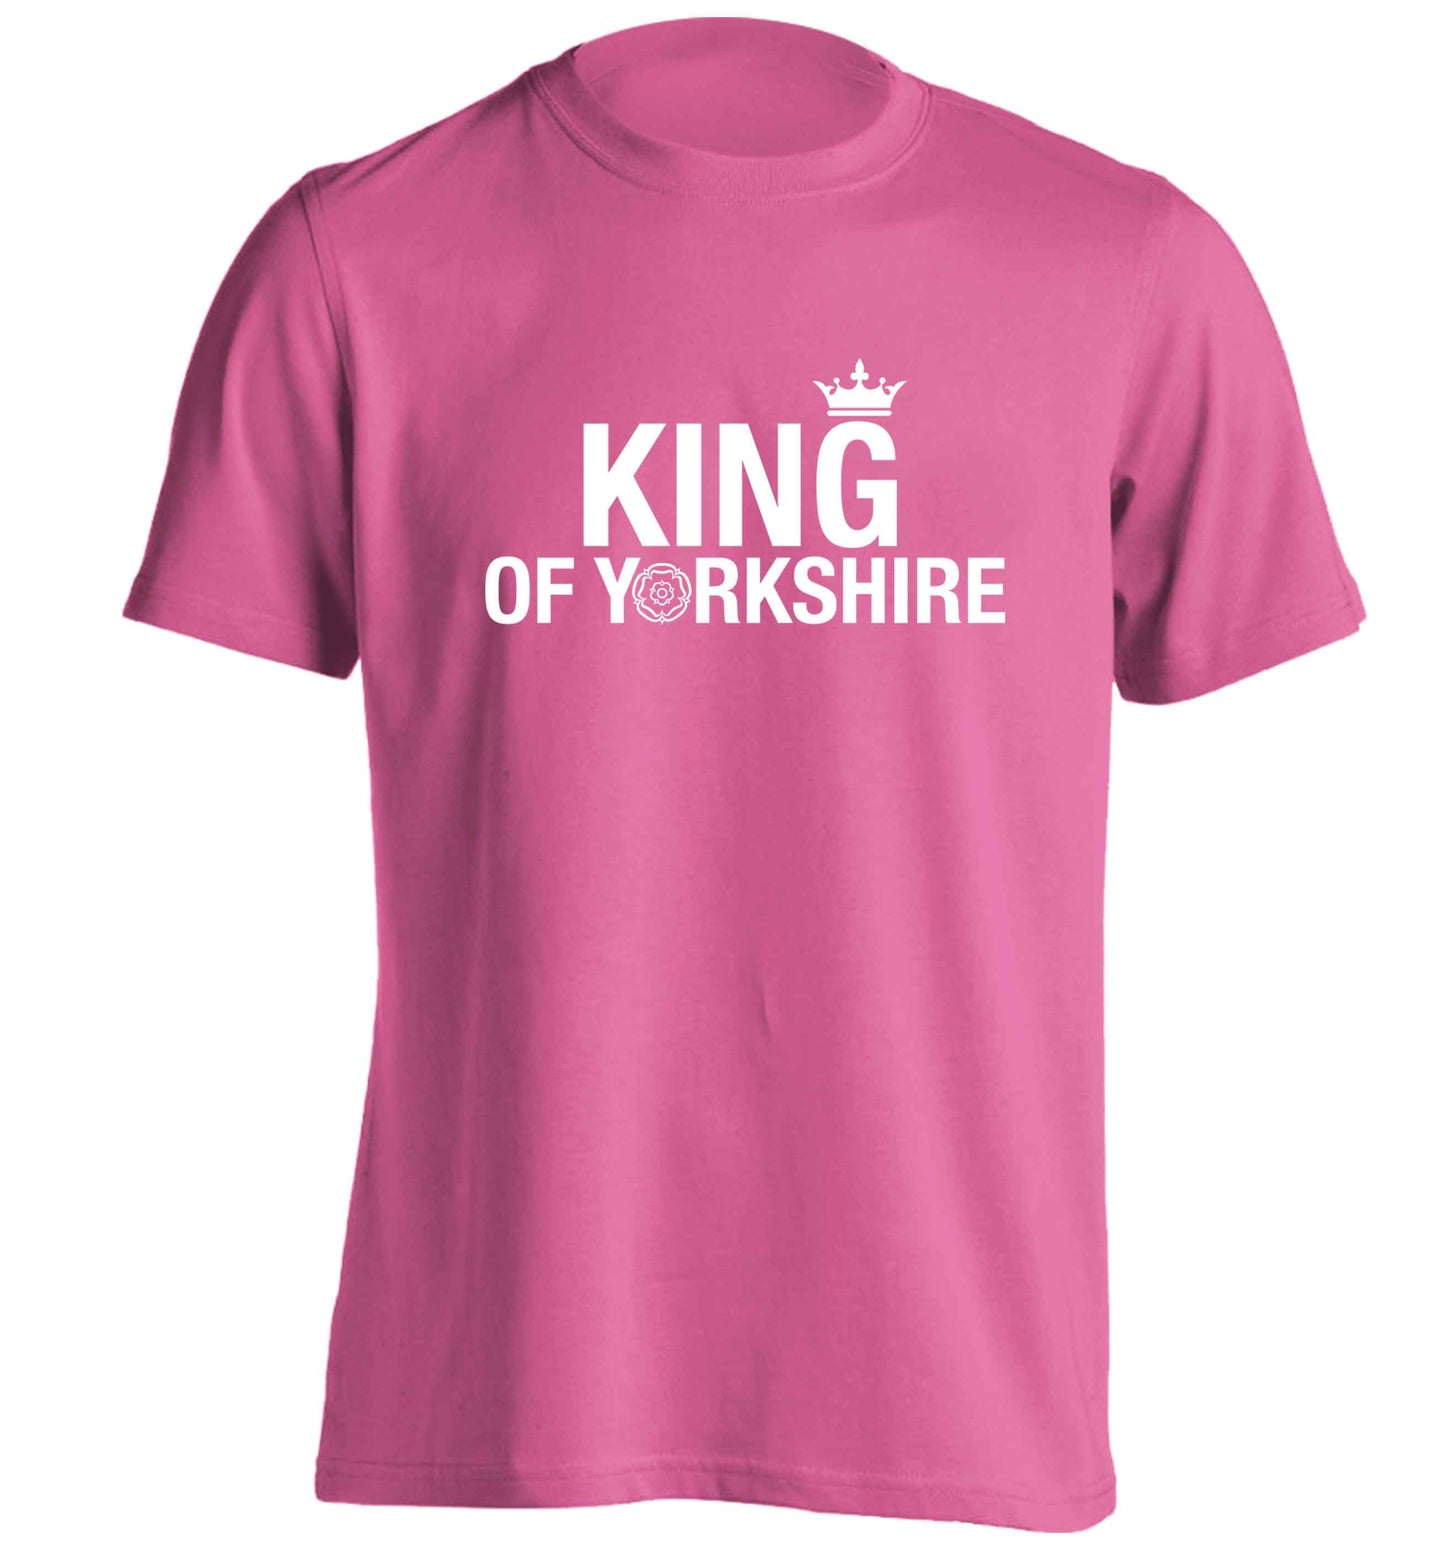 King of Yorkshire adults unisex pink Tshirt 2XL